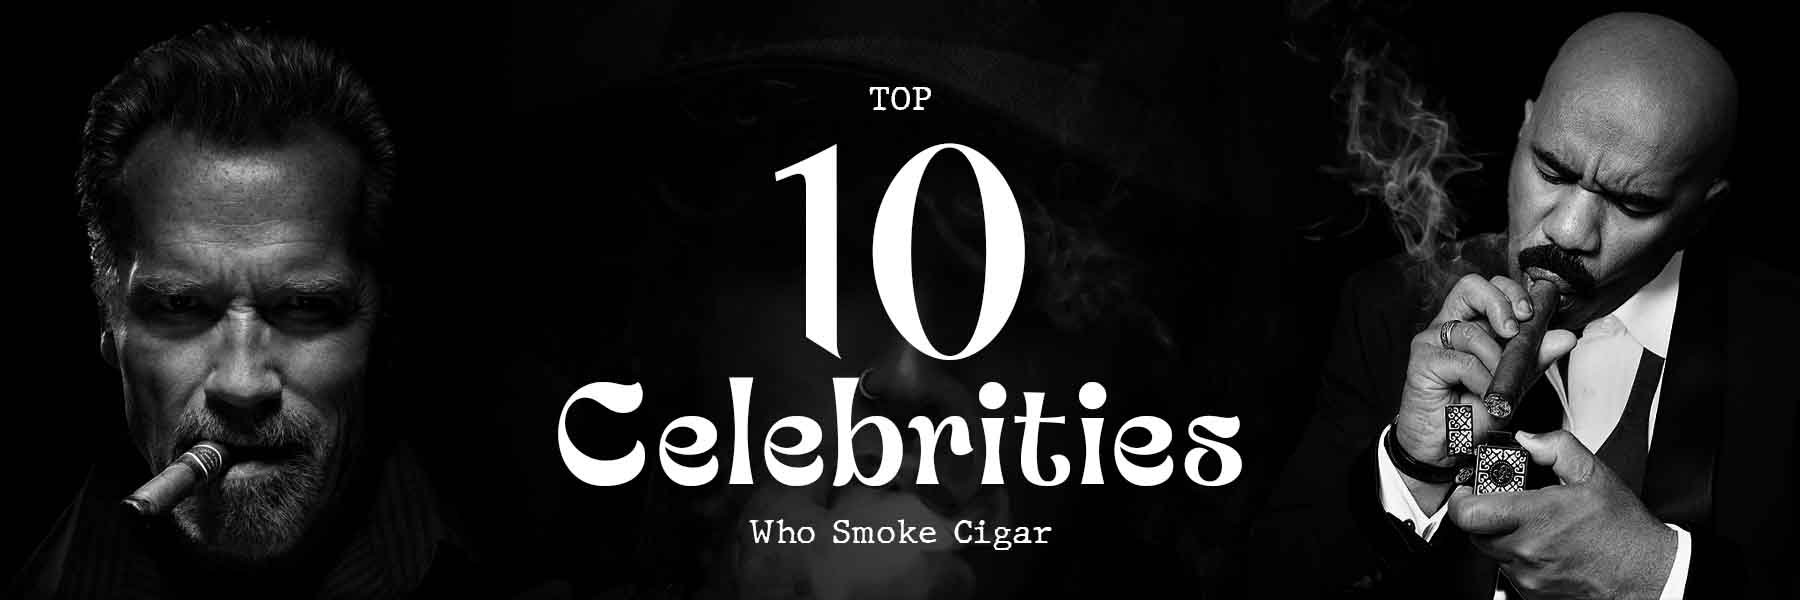 Top 10 celebrities who smoke cigar